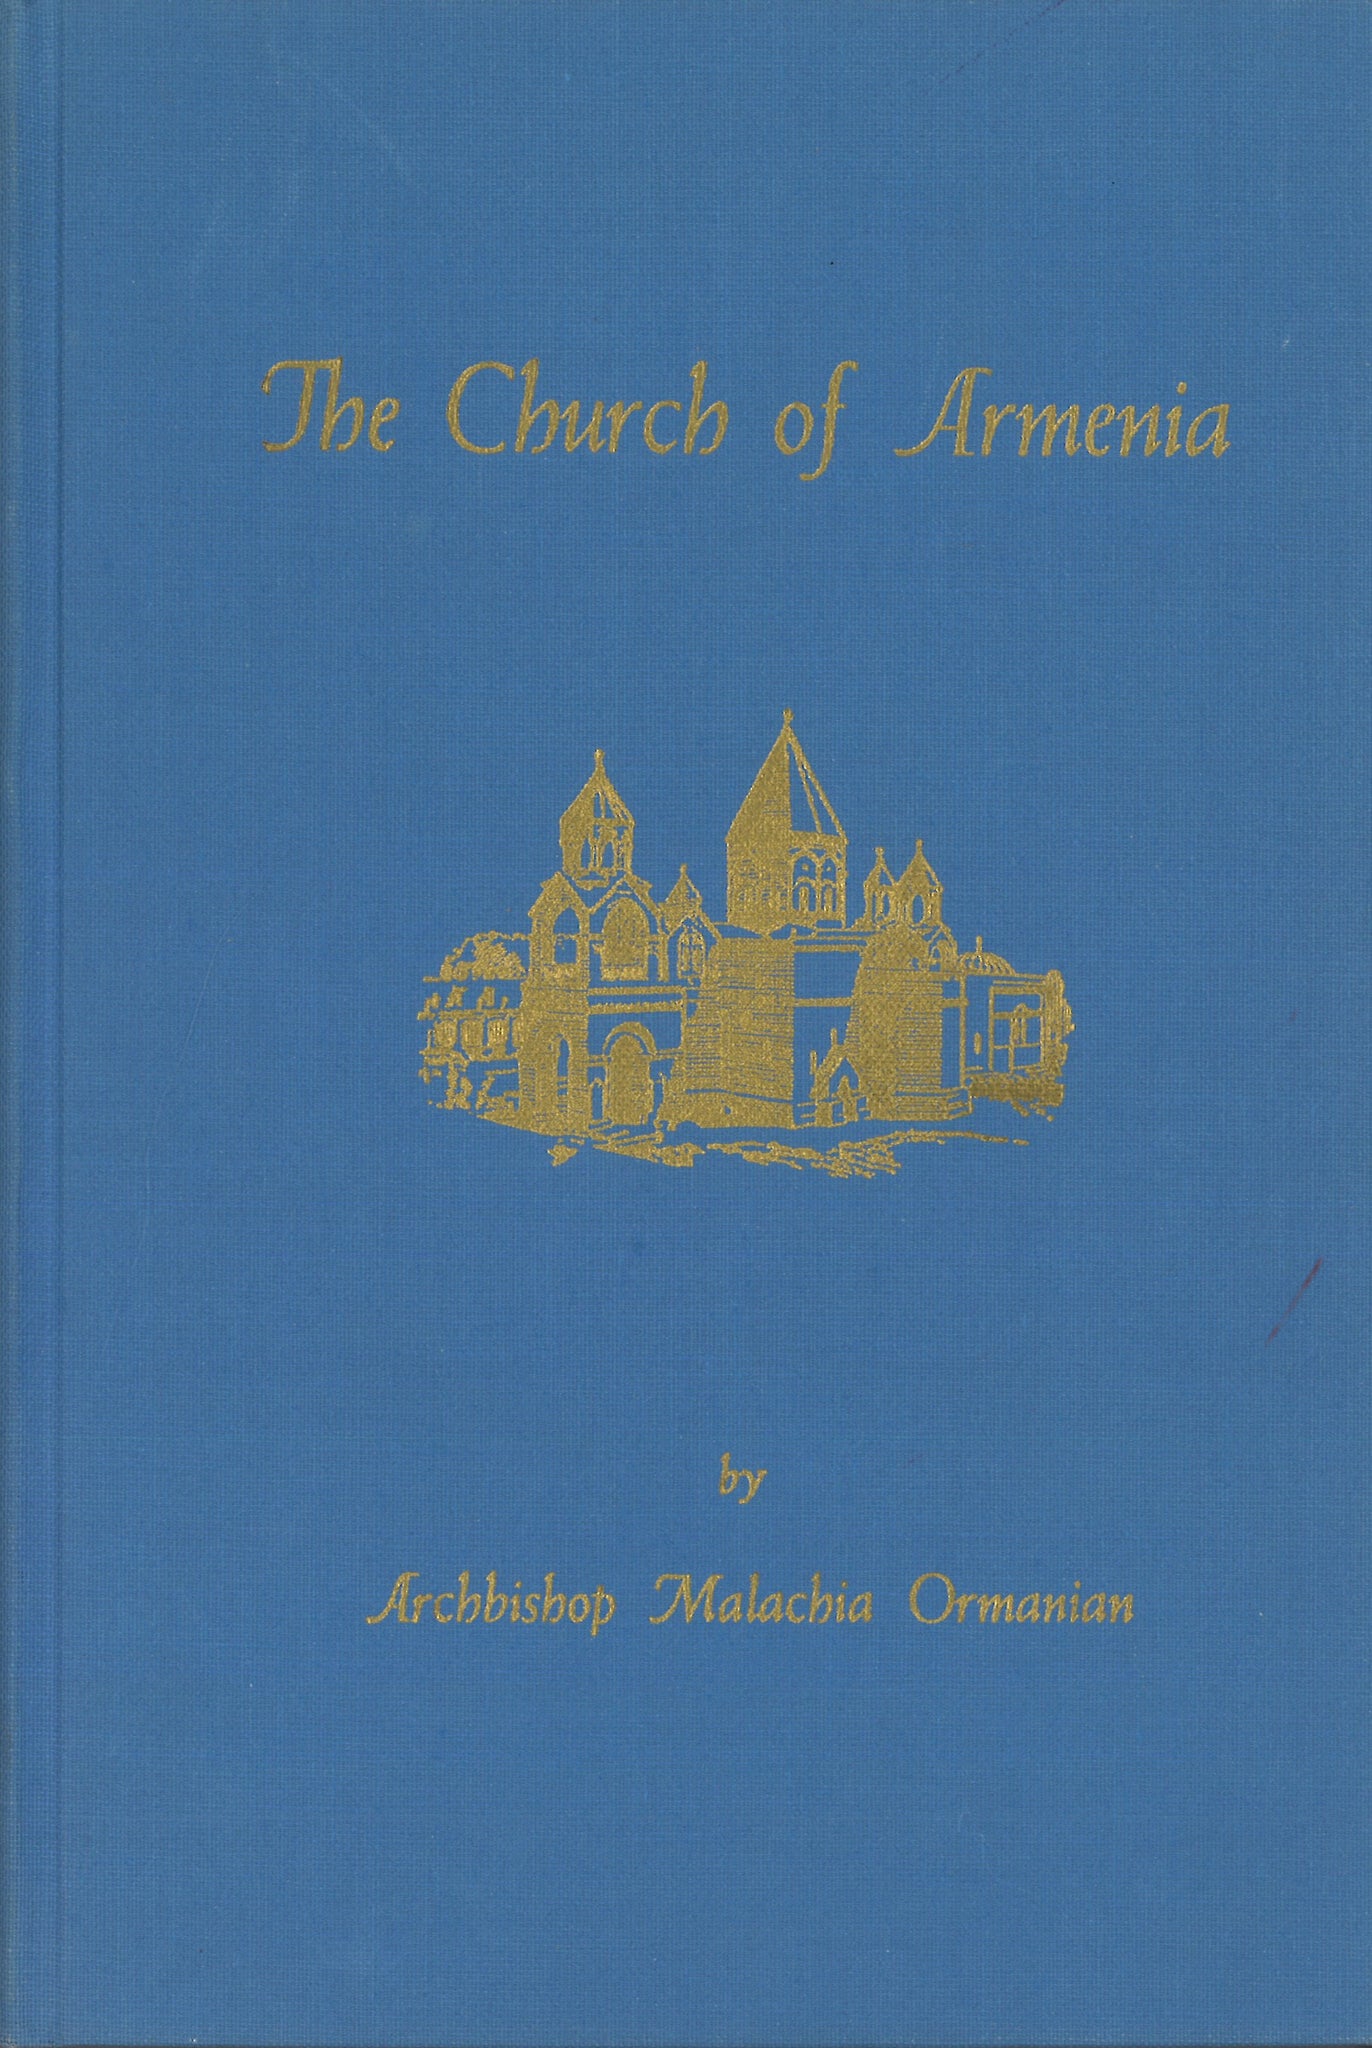 CHURCH OF ARMENIA, THE: The History, Doctrine, Rule, Discipline, Liturgy and Literature